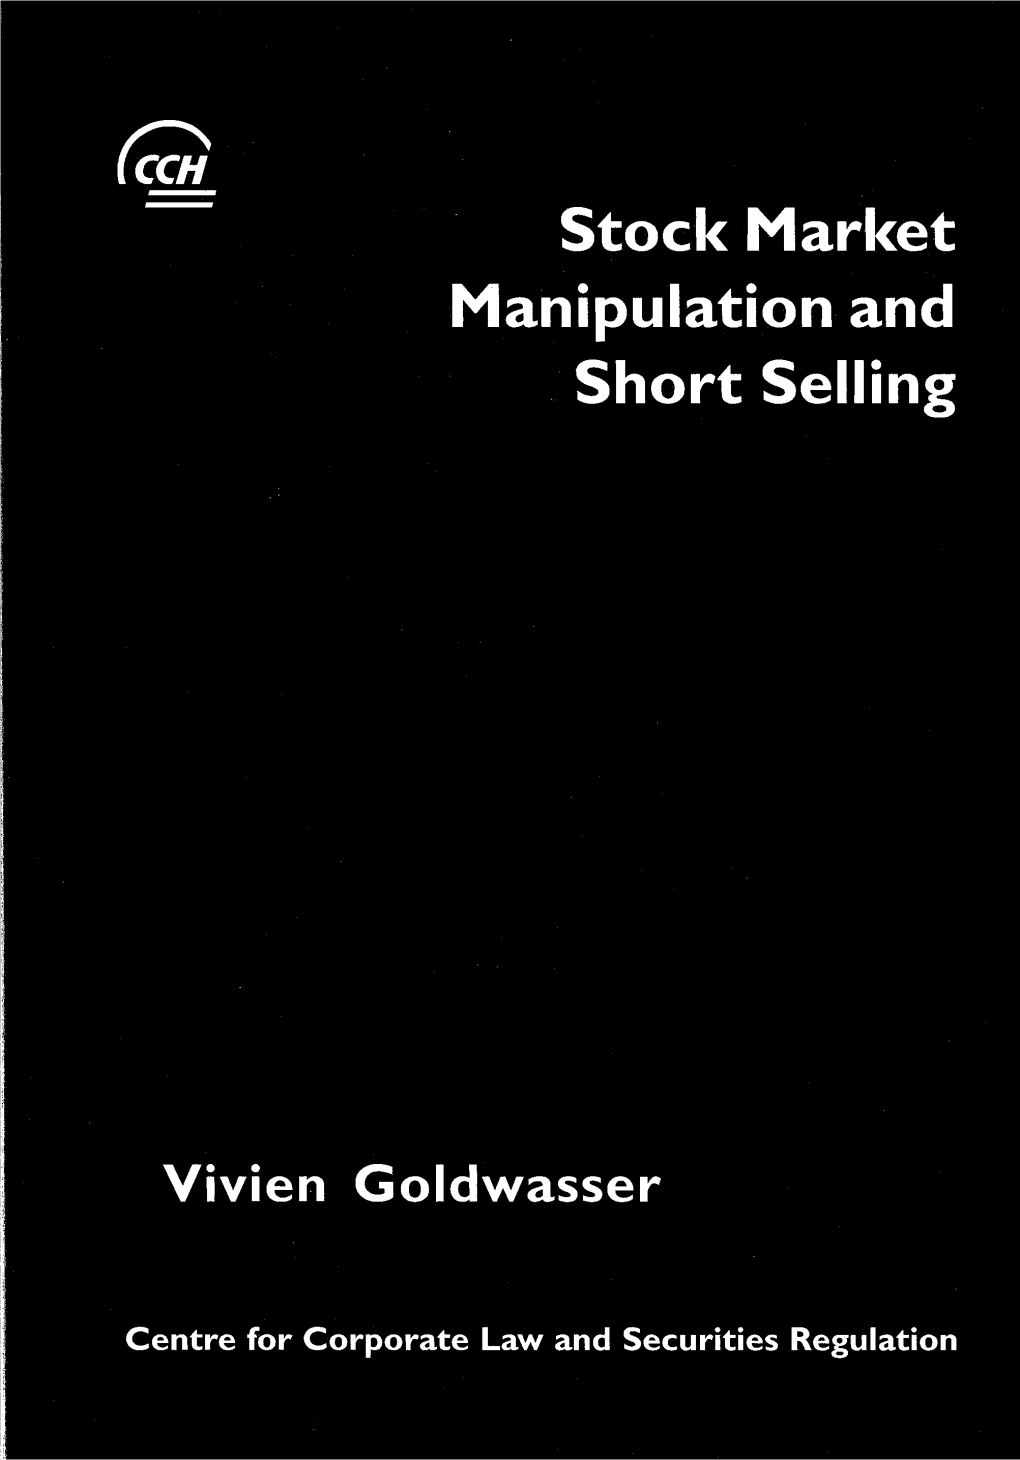 Vivien Goldwasser, Stock Market Manipulation and Short Selling